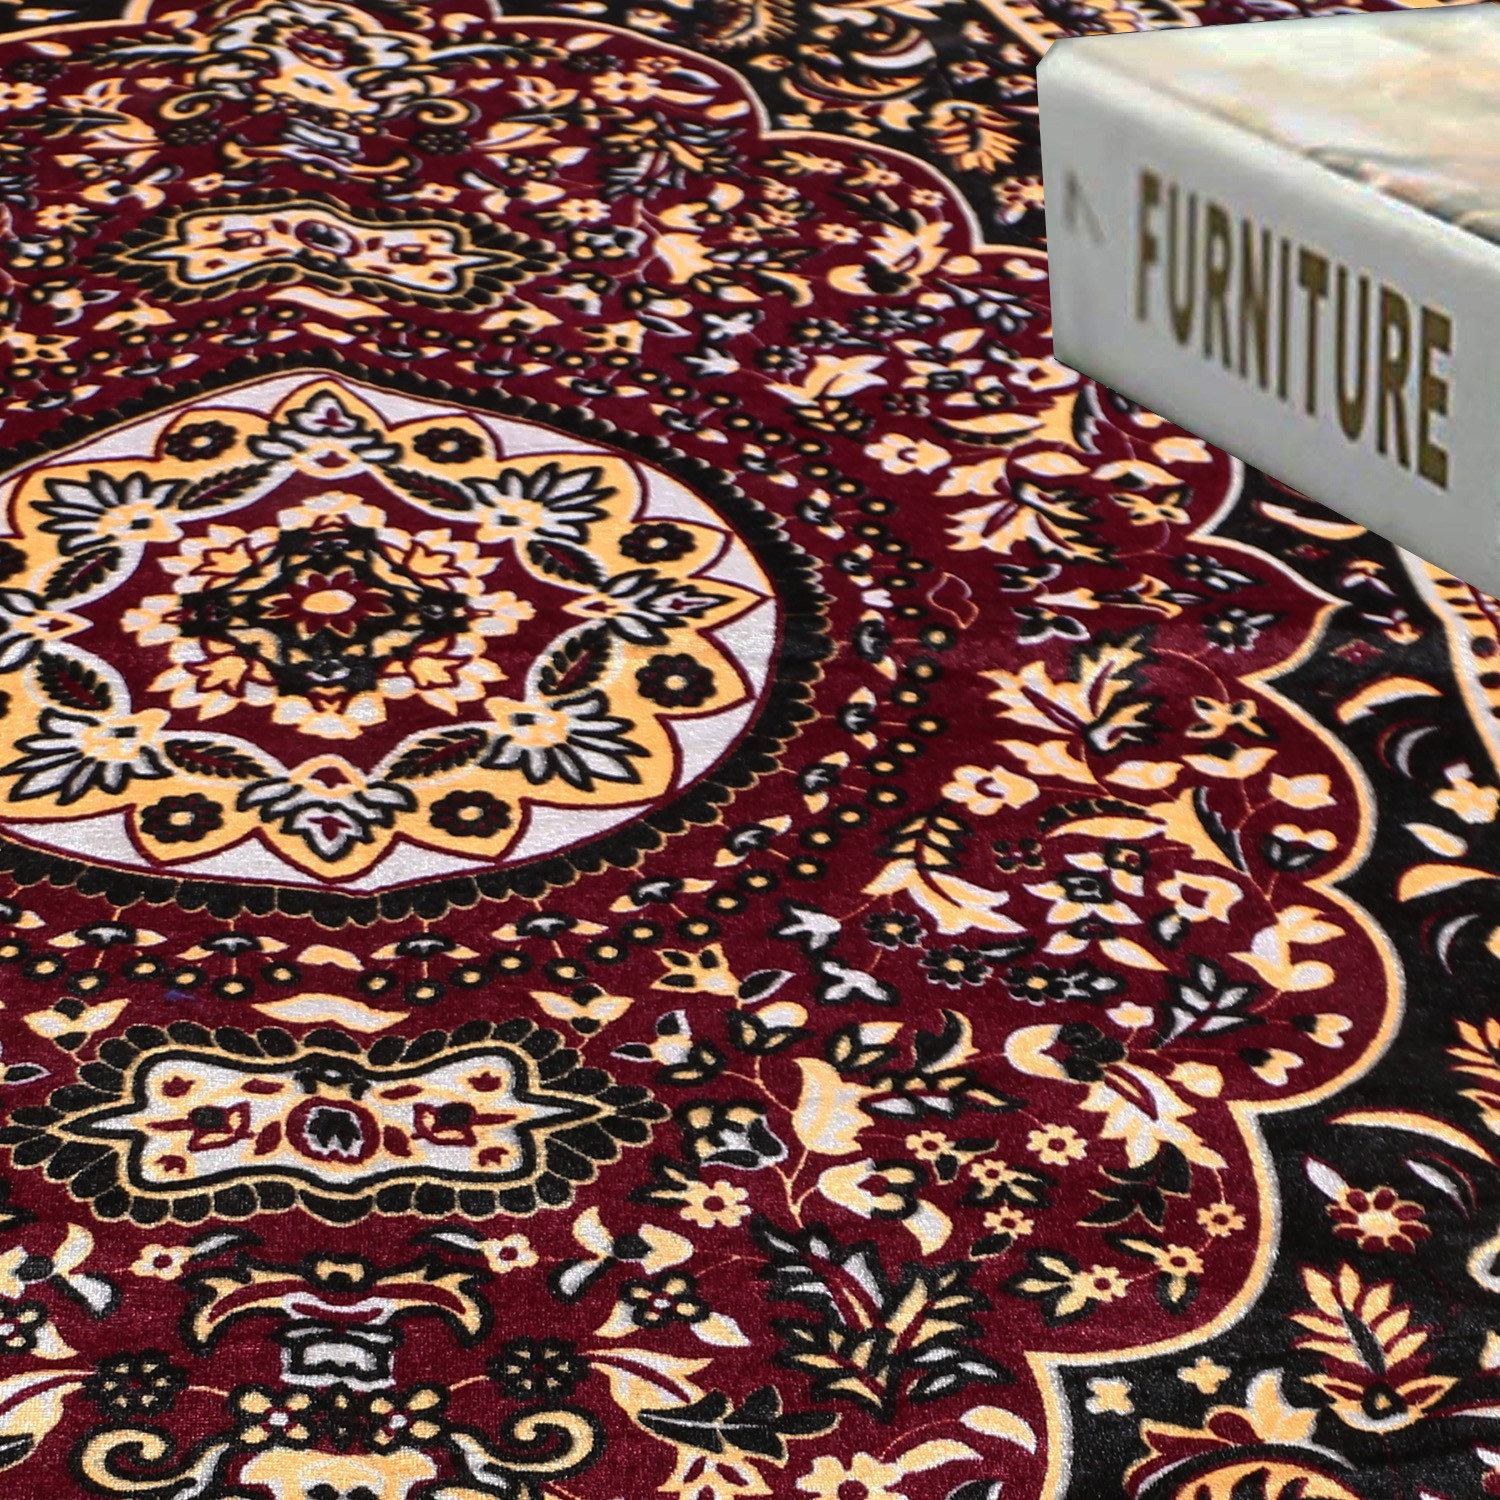 Kuber Industries Carpet|Water Absorption Kalamkari Paisley Pattern Floor Mat|Velvet Sitting Carpet for Hall, Living Room, 5x7 Feet (Maroon)